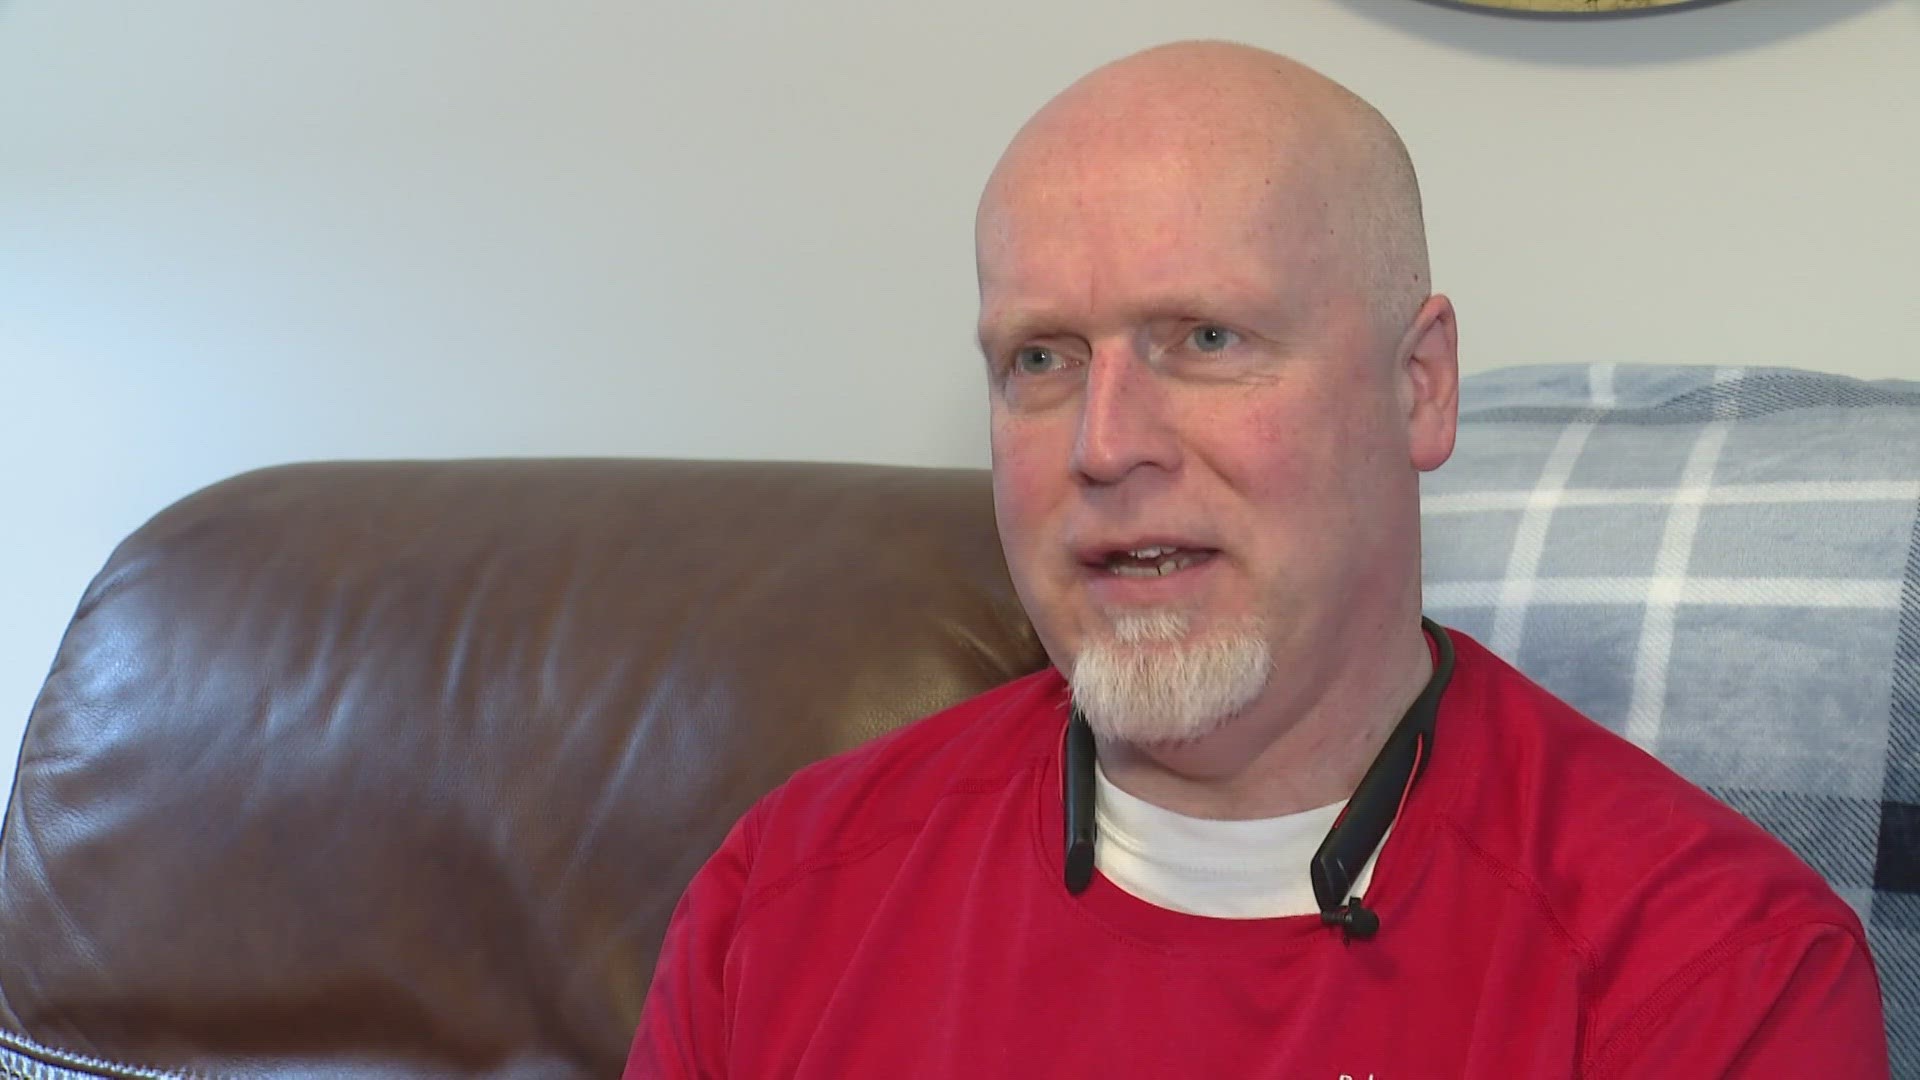 13News reporter John Doran talks with heart attack survivor James Hall for this week's Inspiring Indiana.